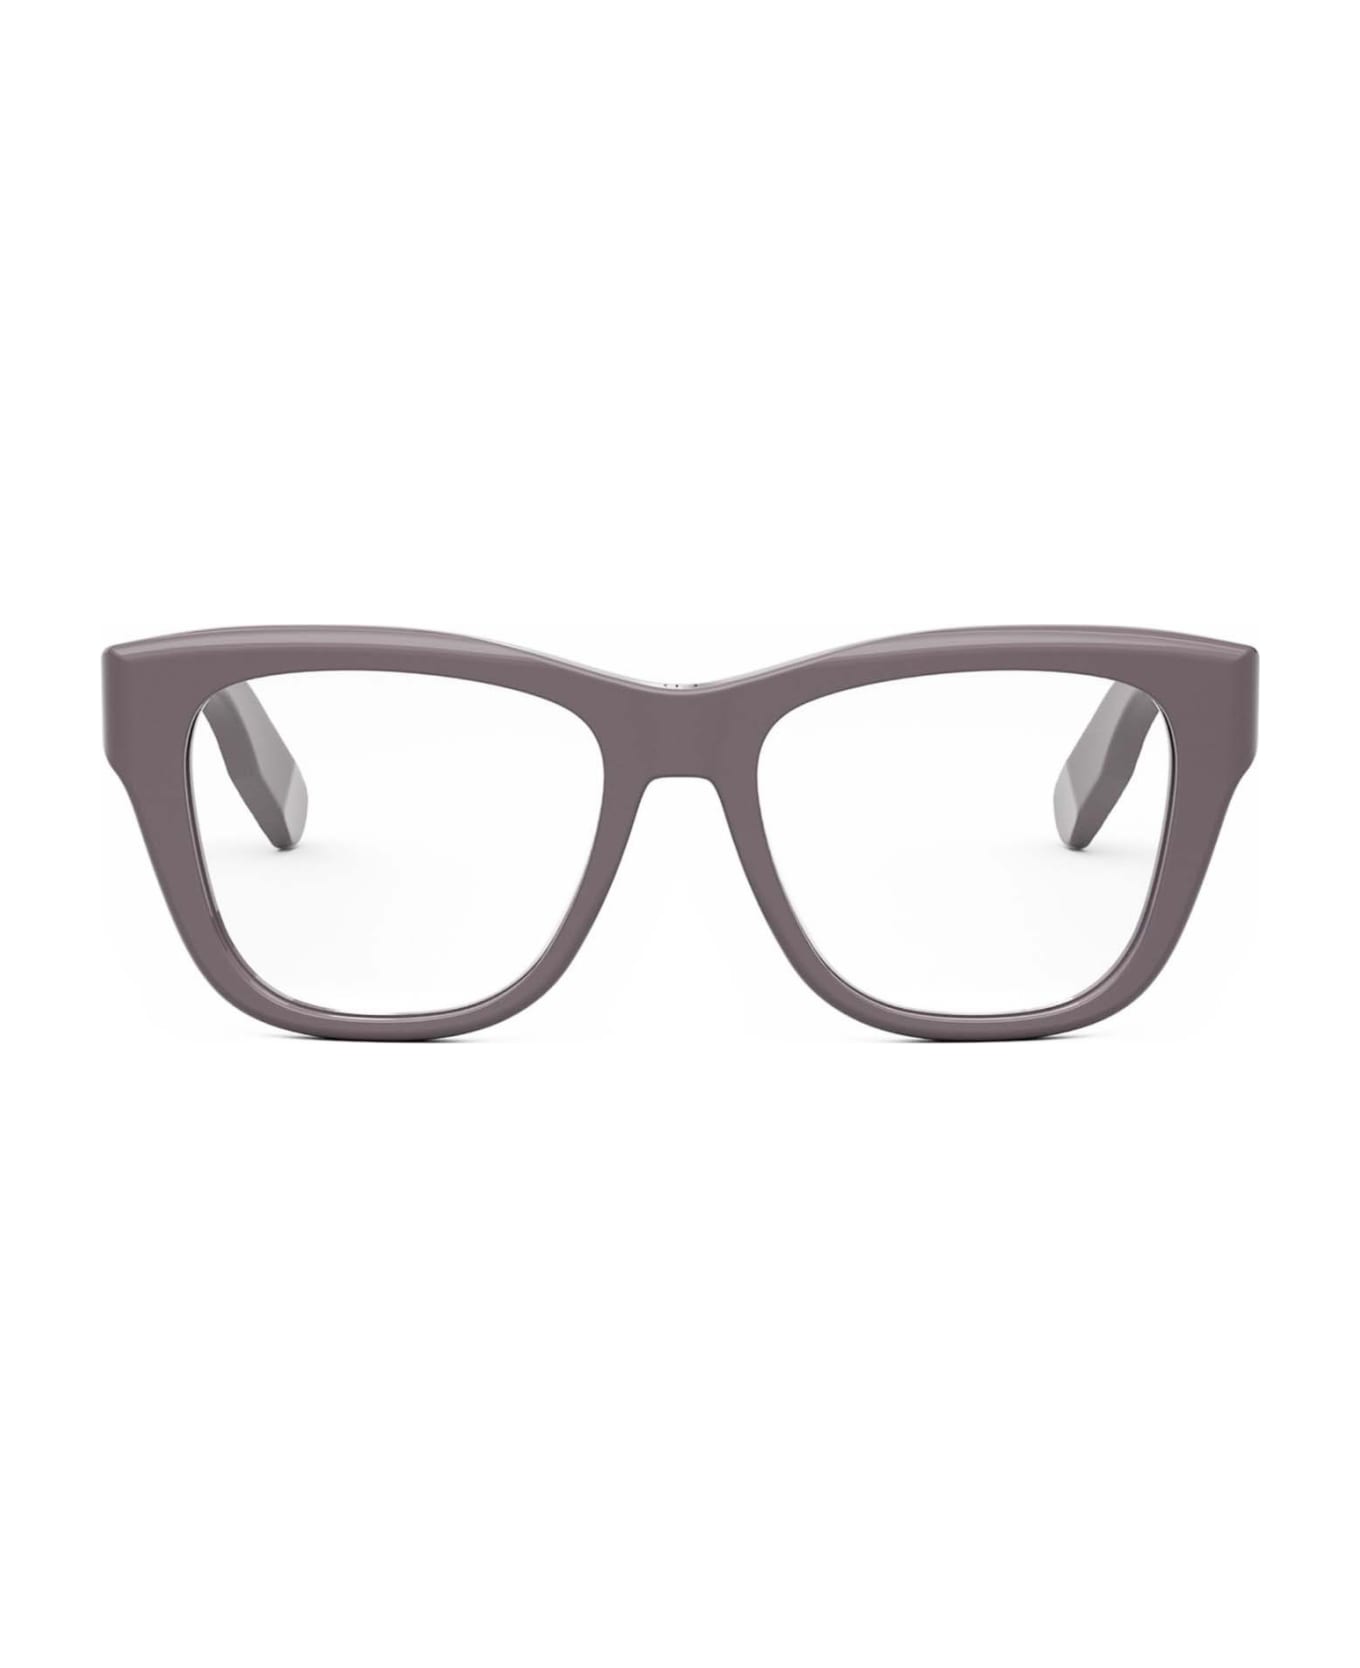 Dior Eyewear Glasses - Grigio アイウェア